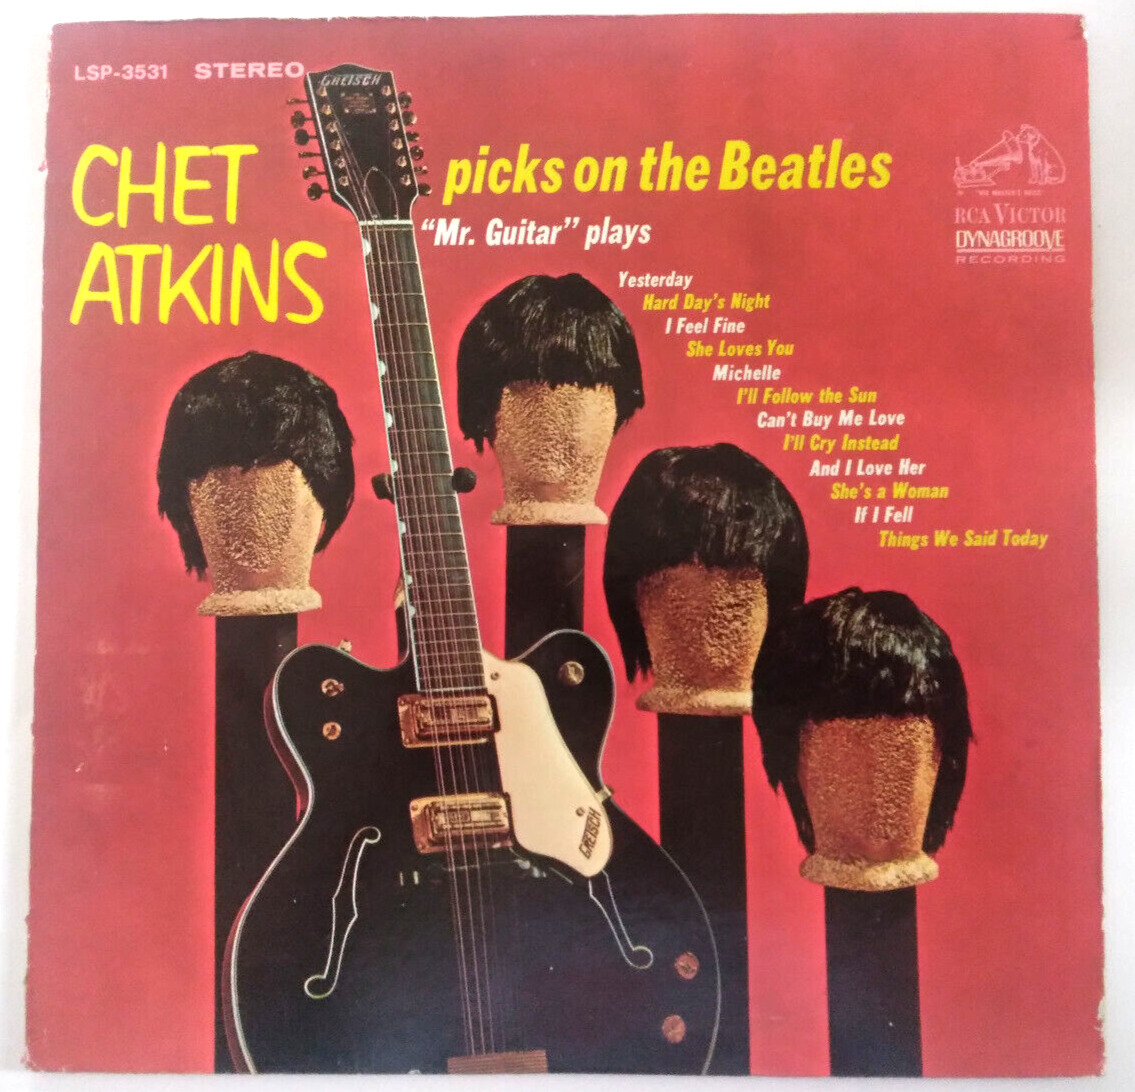 Chet Atkins - Picks On the Beatles, Vinyl, 1966, RCA Victor Label, Stereo